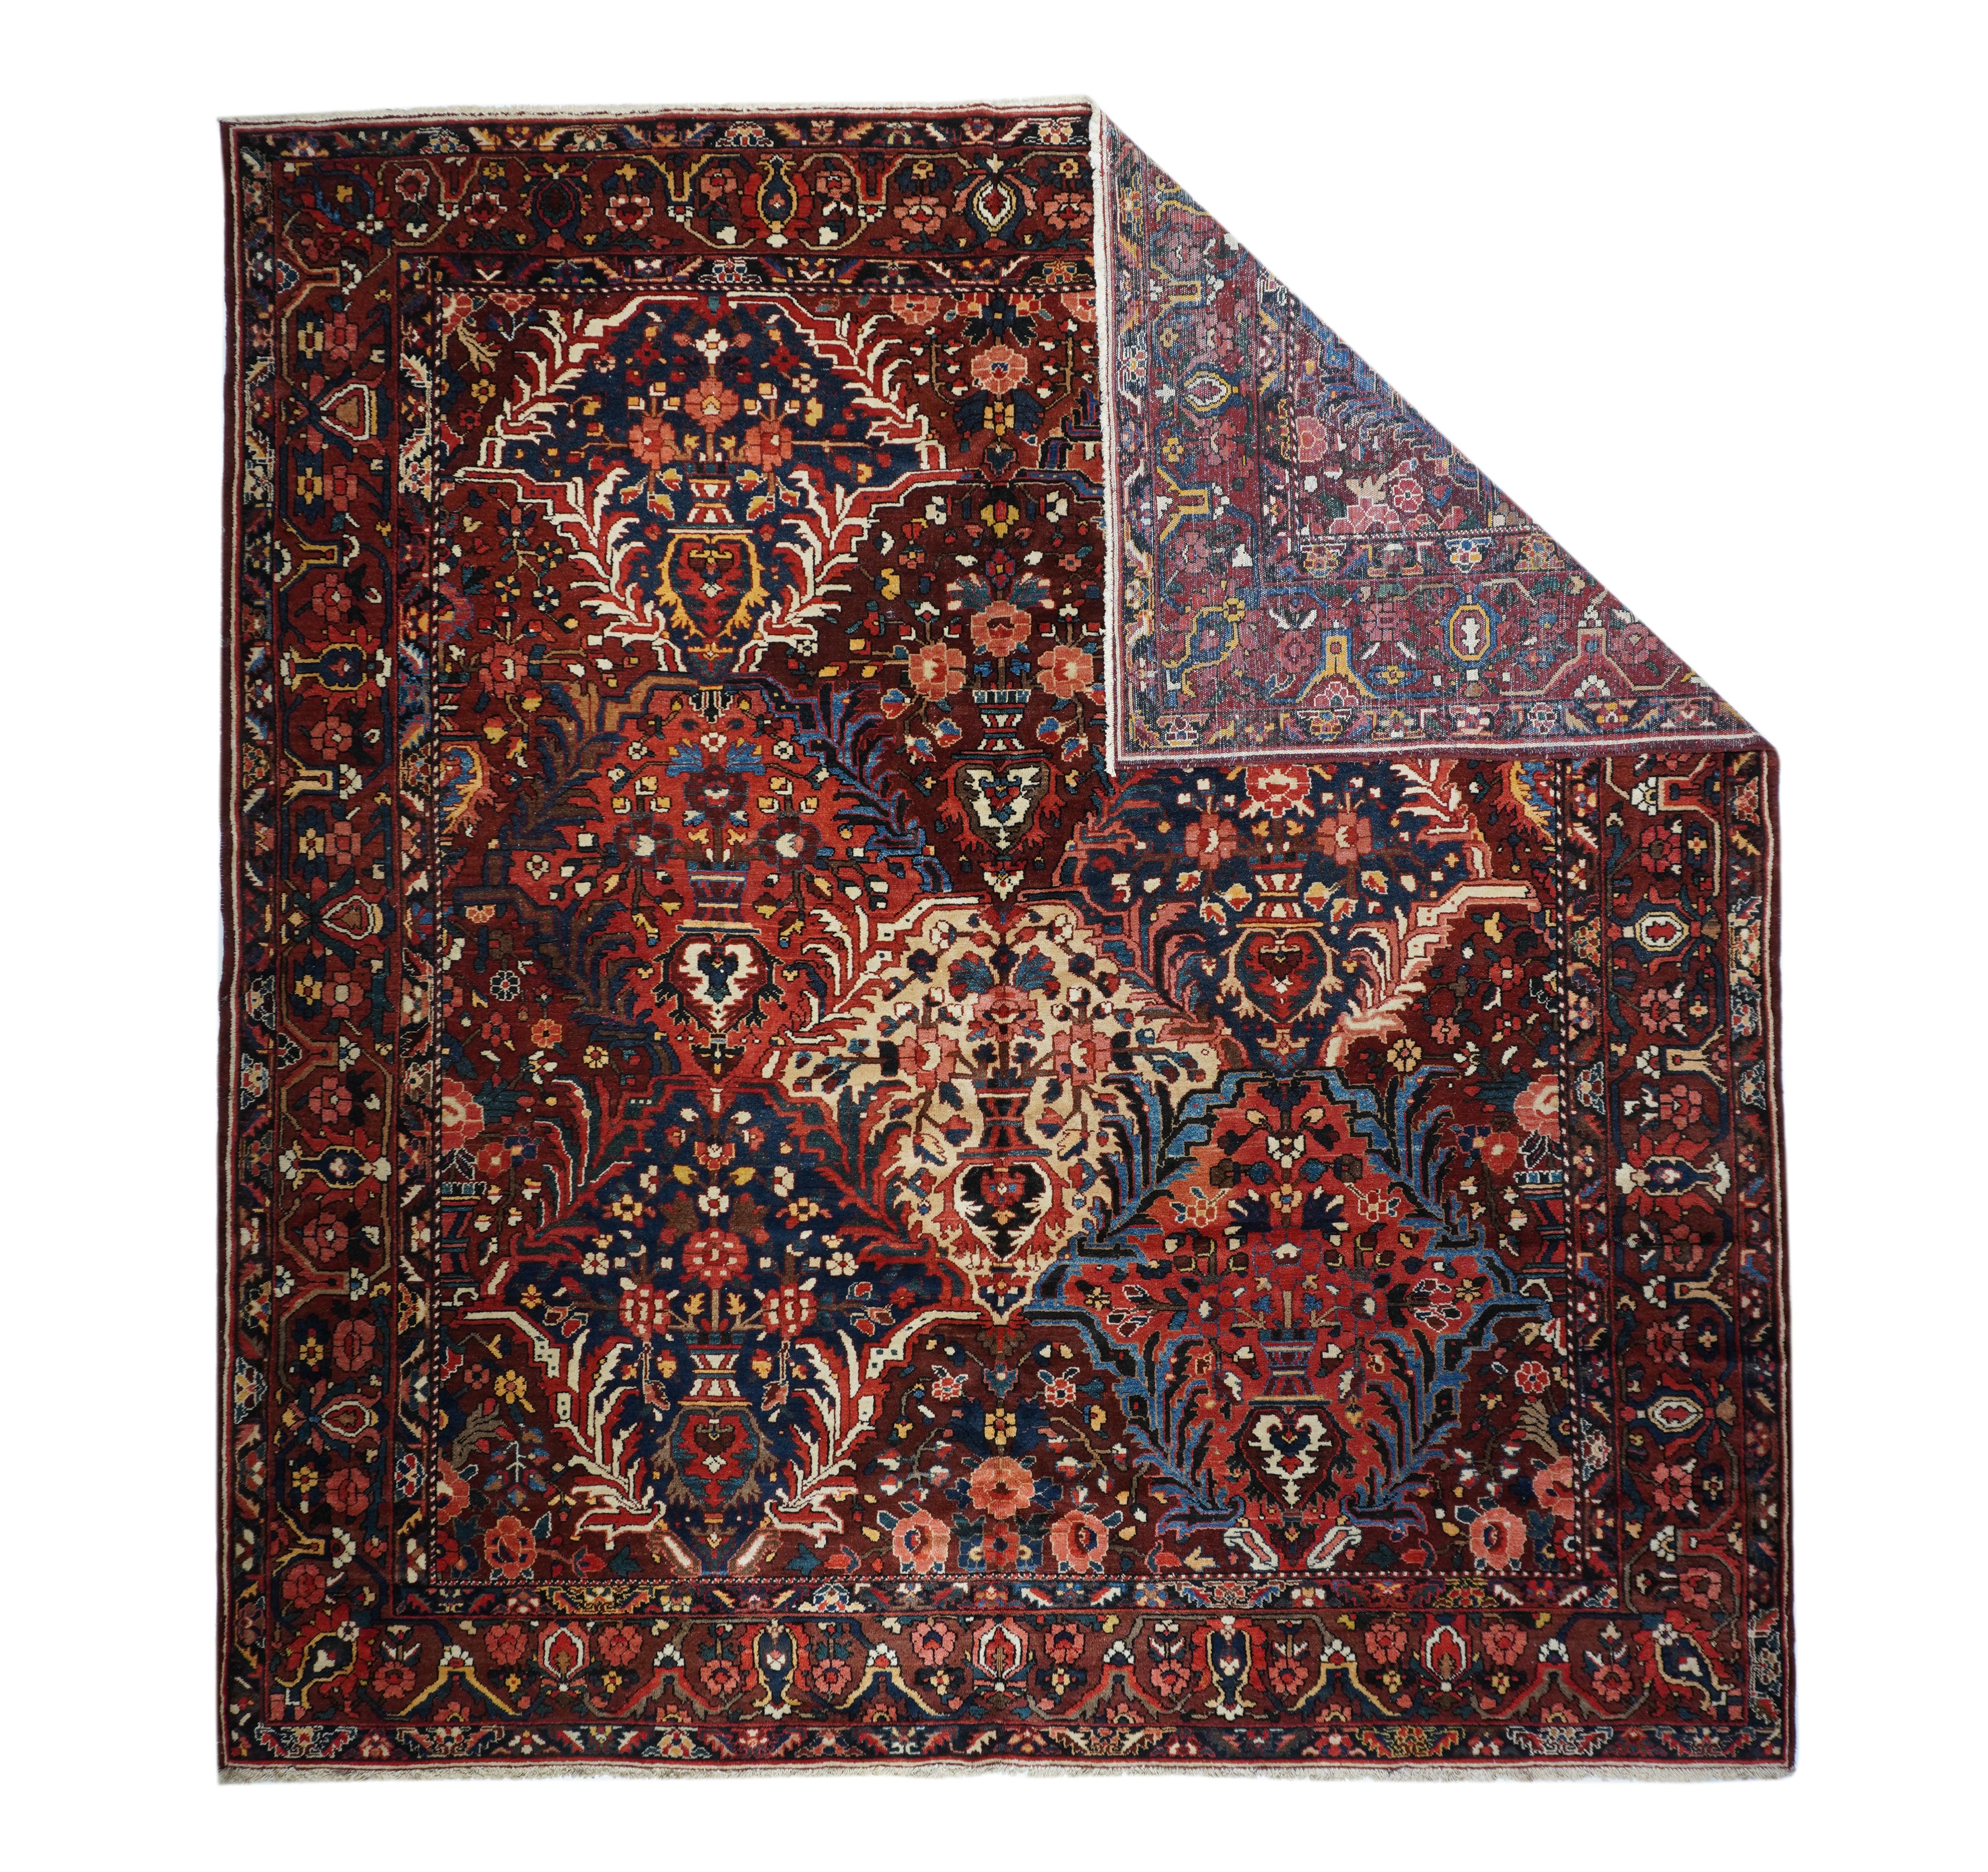 Bakhtiari rug measures 11'2'' x 11'10''.